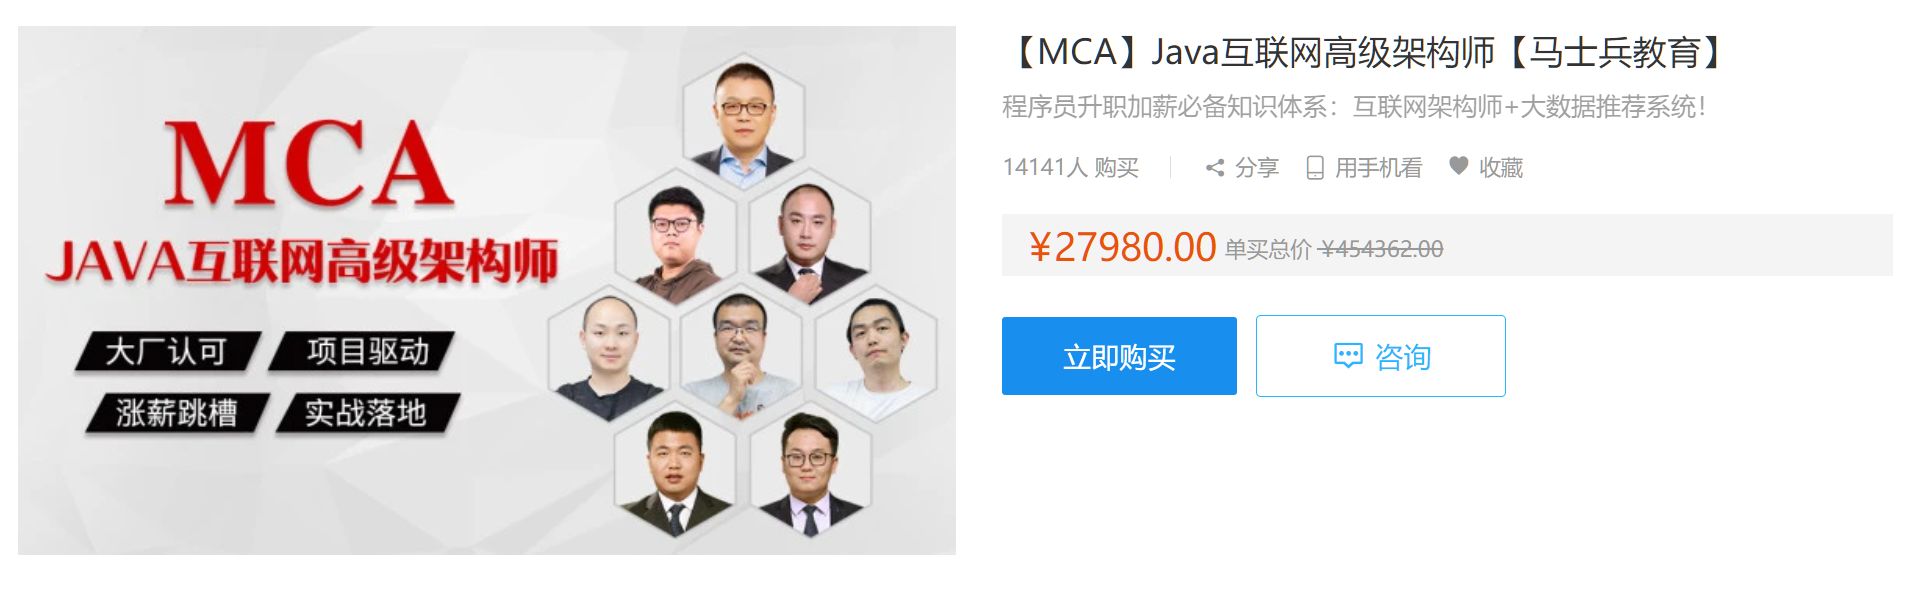 MAC马士兵Java互联网高级架构师，Java精品课程百度云(689 GB) 价值27980元-1